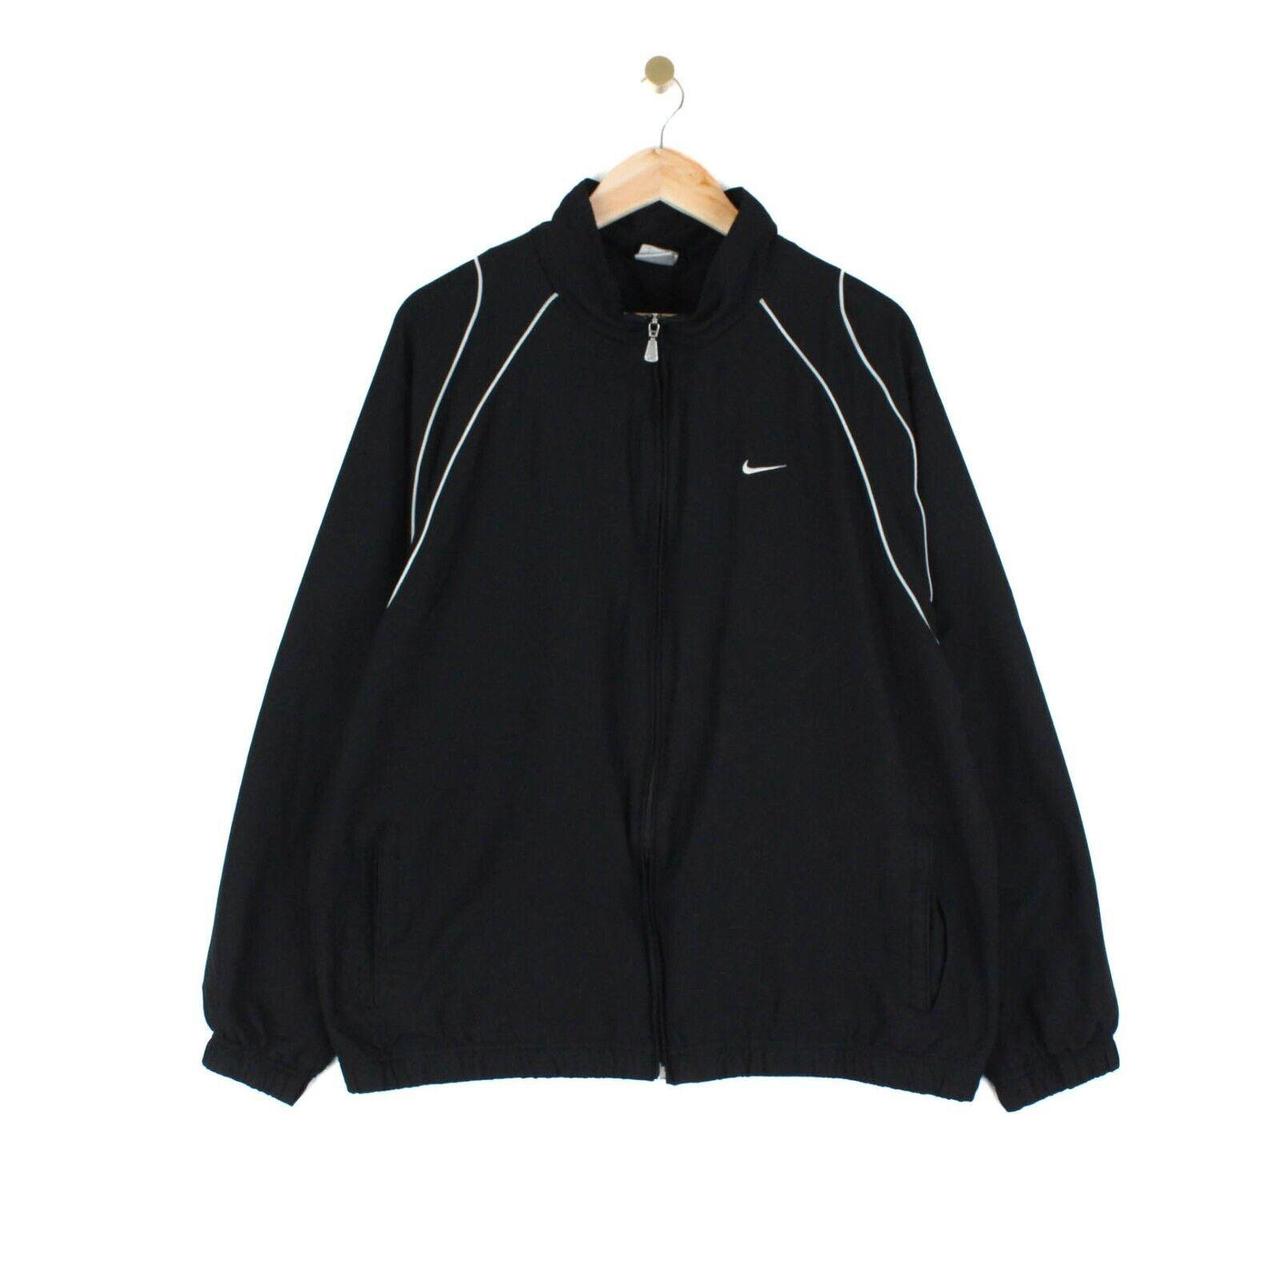 Vintage Nike Track Jacket Black Full Zip Lined... - Depop